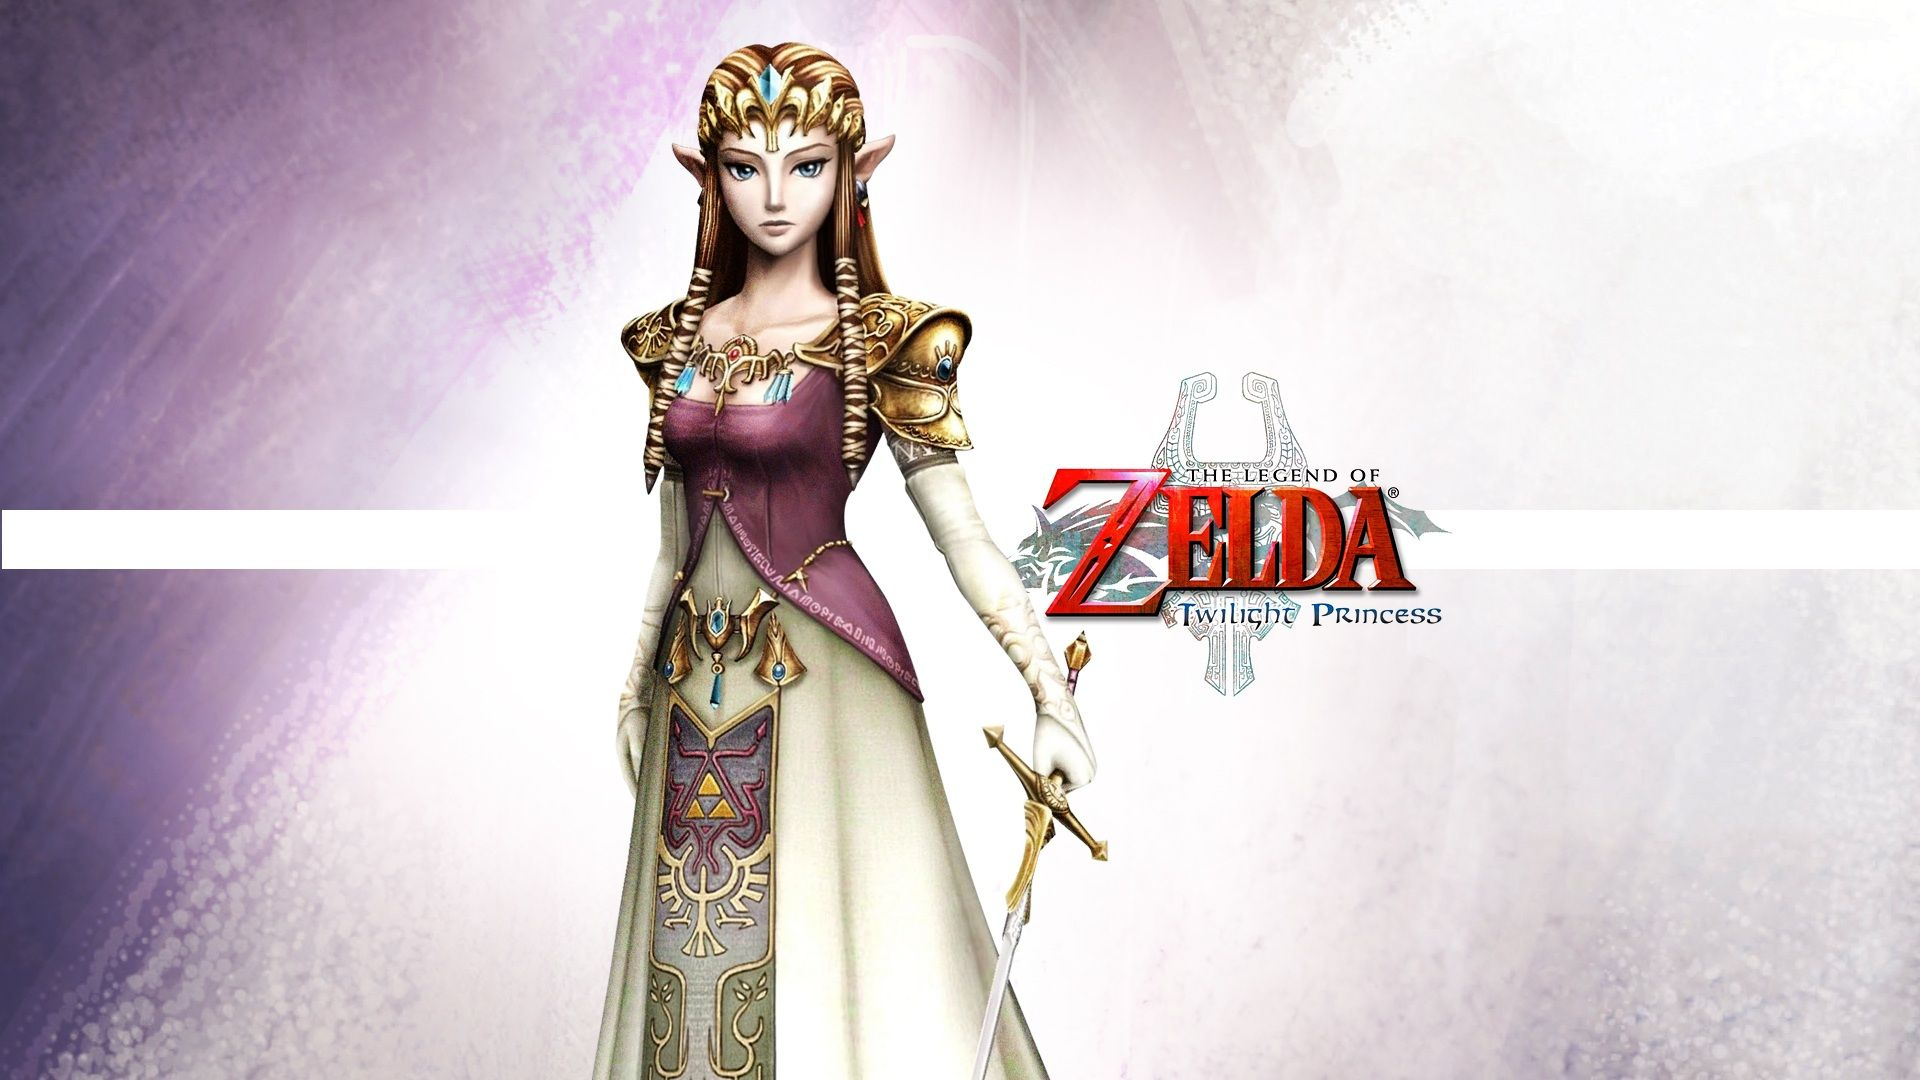 1920x1080 Zelda Twilight Princess: Wallpaper's image | Princess zelda, Zelda twilight princess, Twilight princess